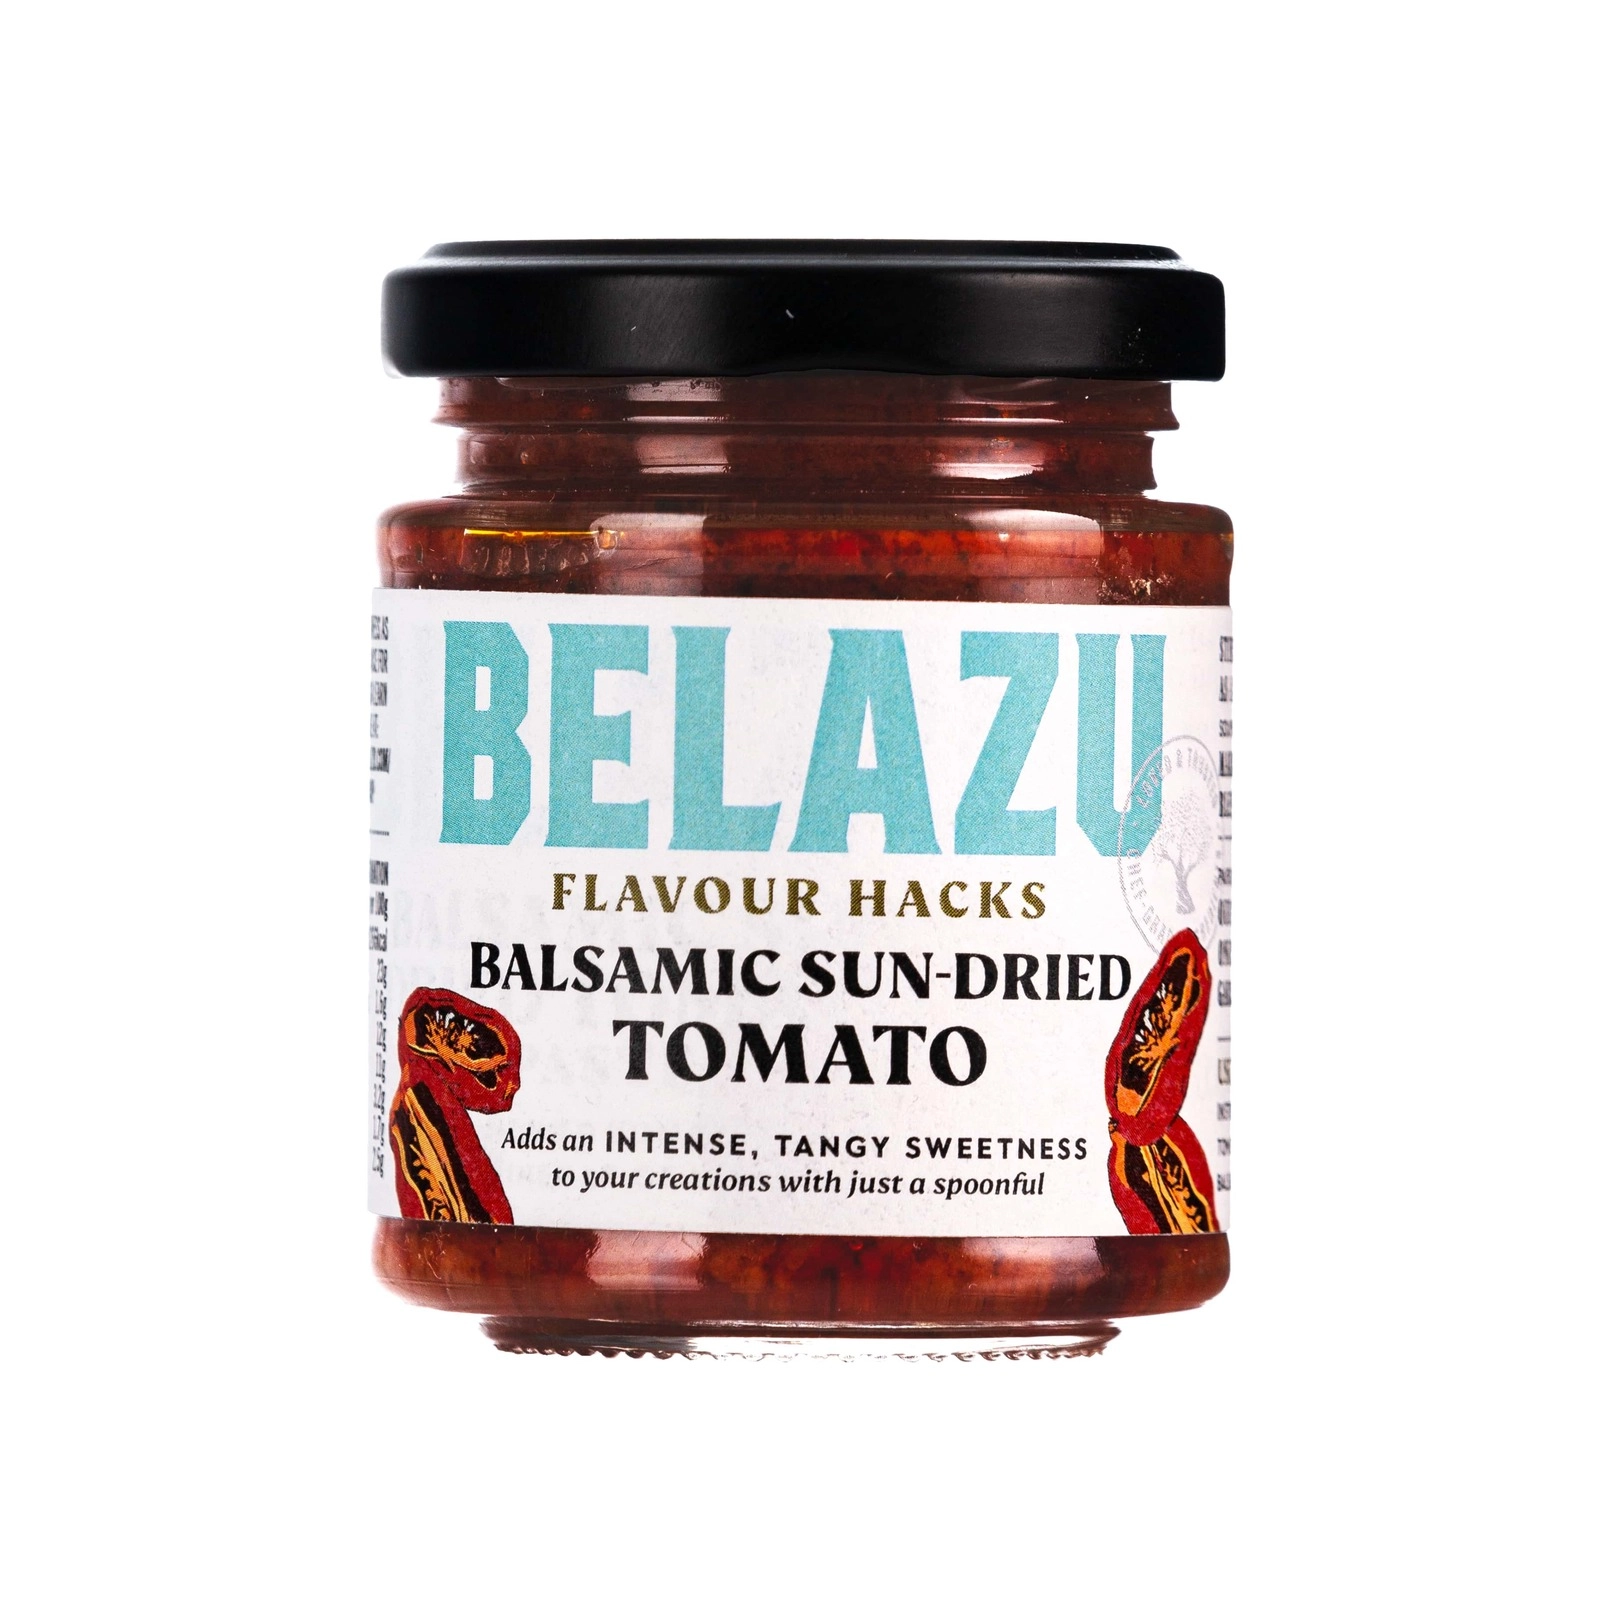 BELAZU Flavour Hack Balsamic Sundried Tomato Paste (130g)